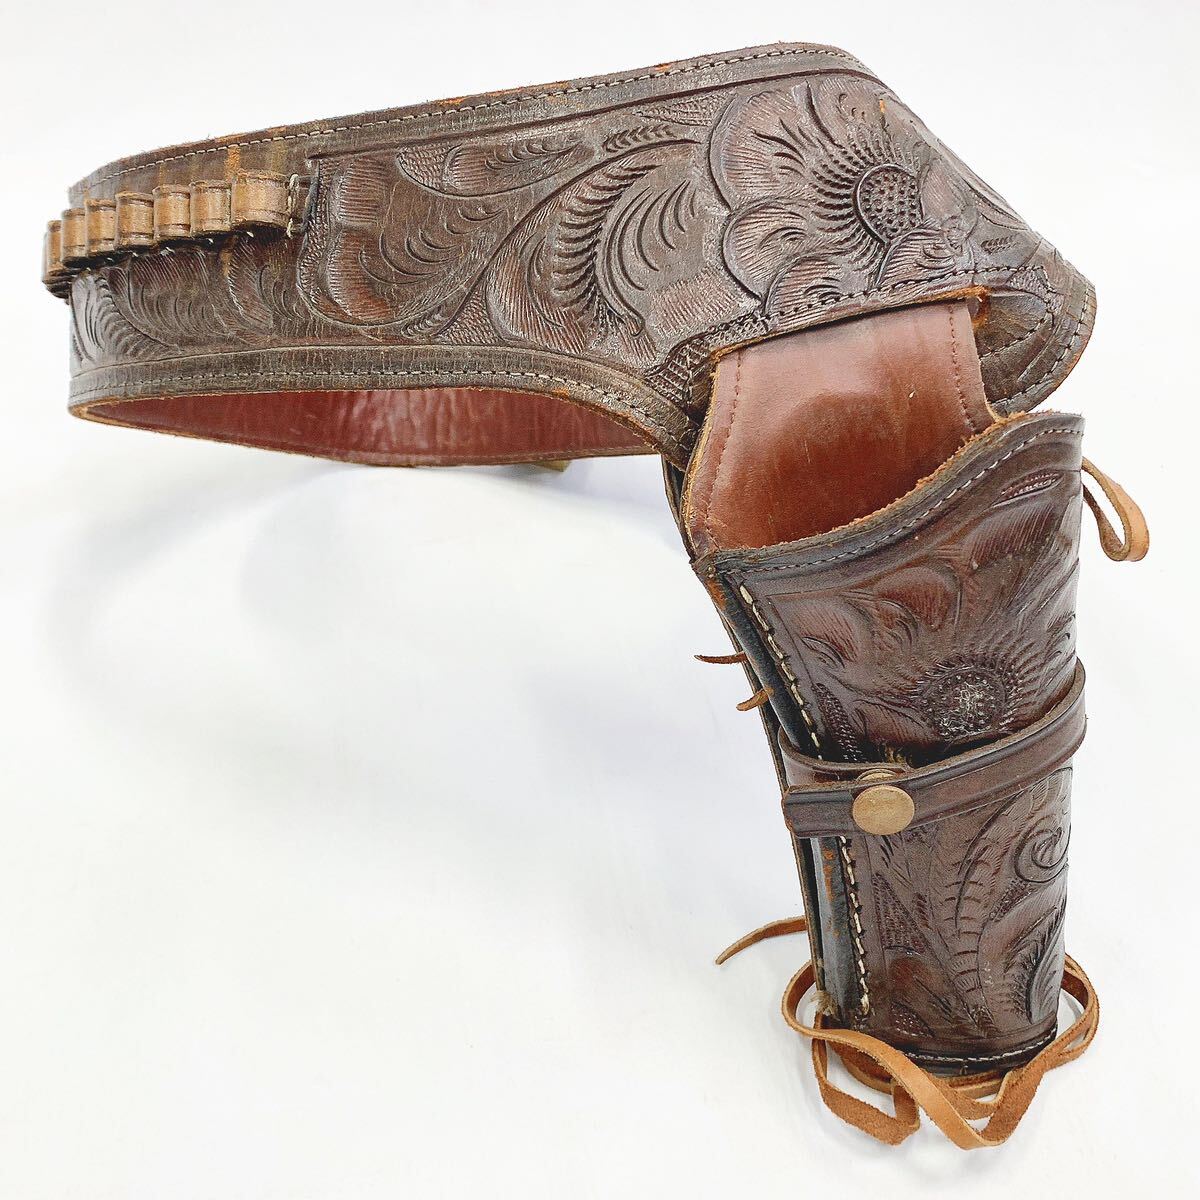  rare! original leather gun belt Brown Mexico western Western 36 -inch C38 357 ho ru Star Vintage retro 05-0428*